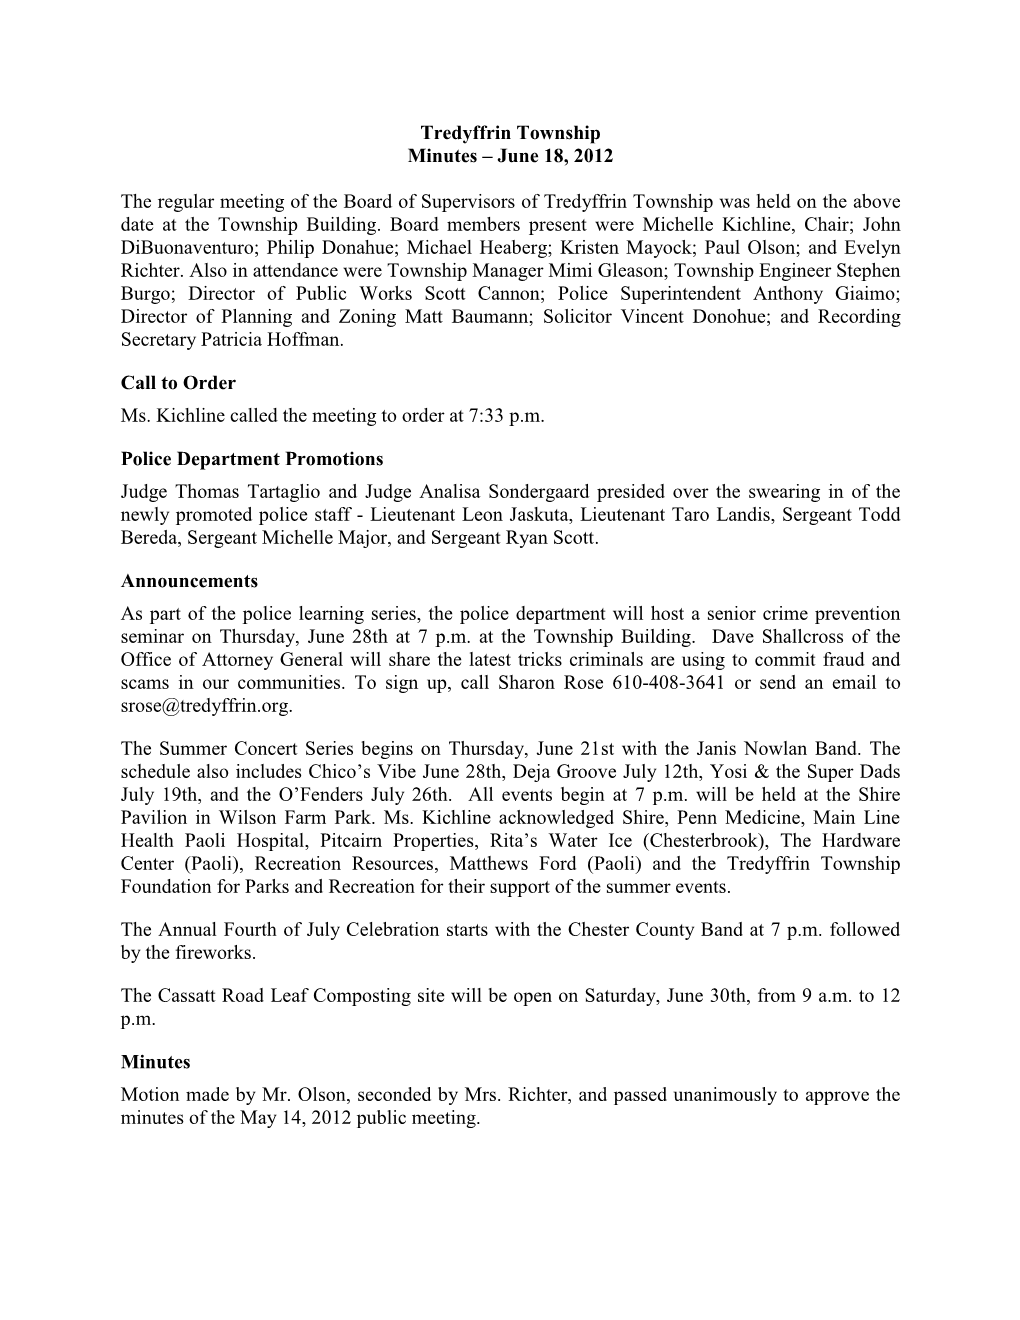 Tredyffrin Township Minutes – June 18, 2012